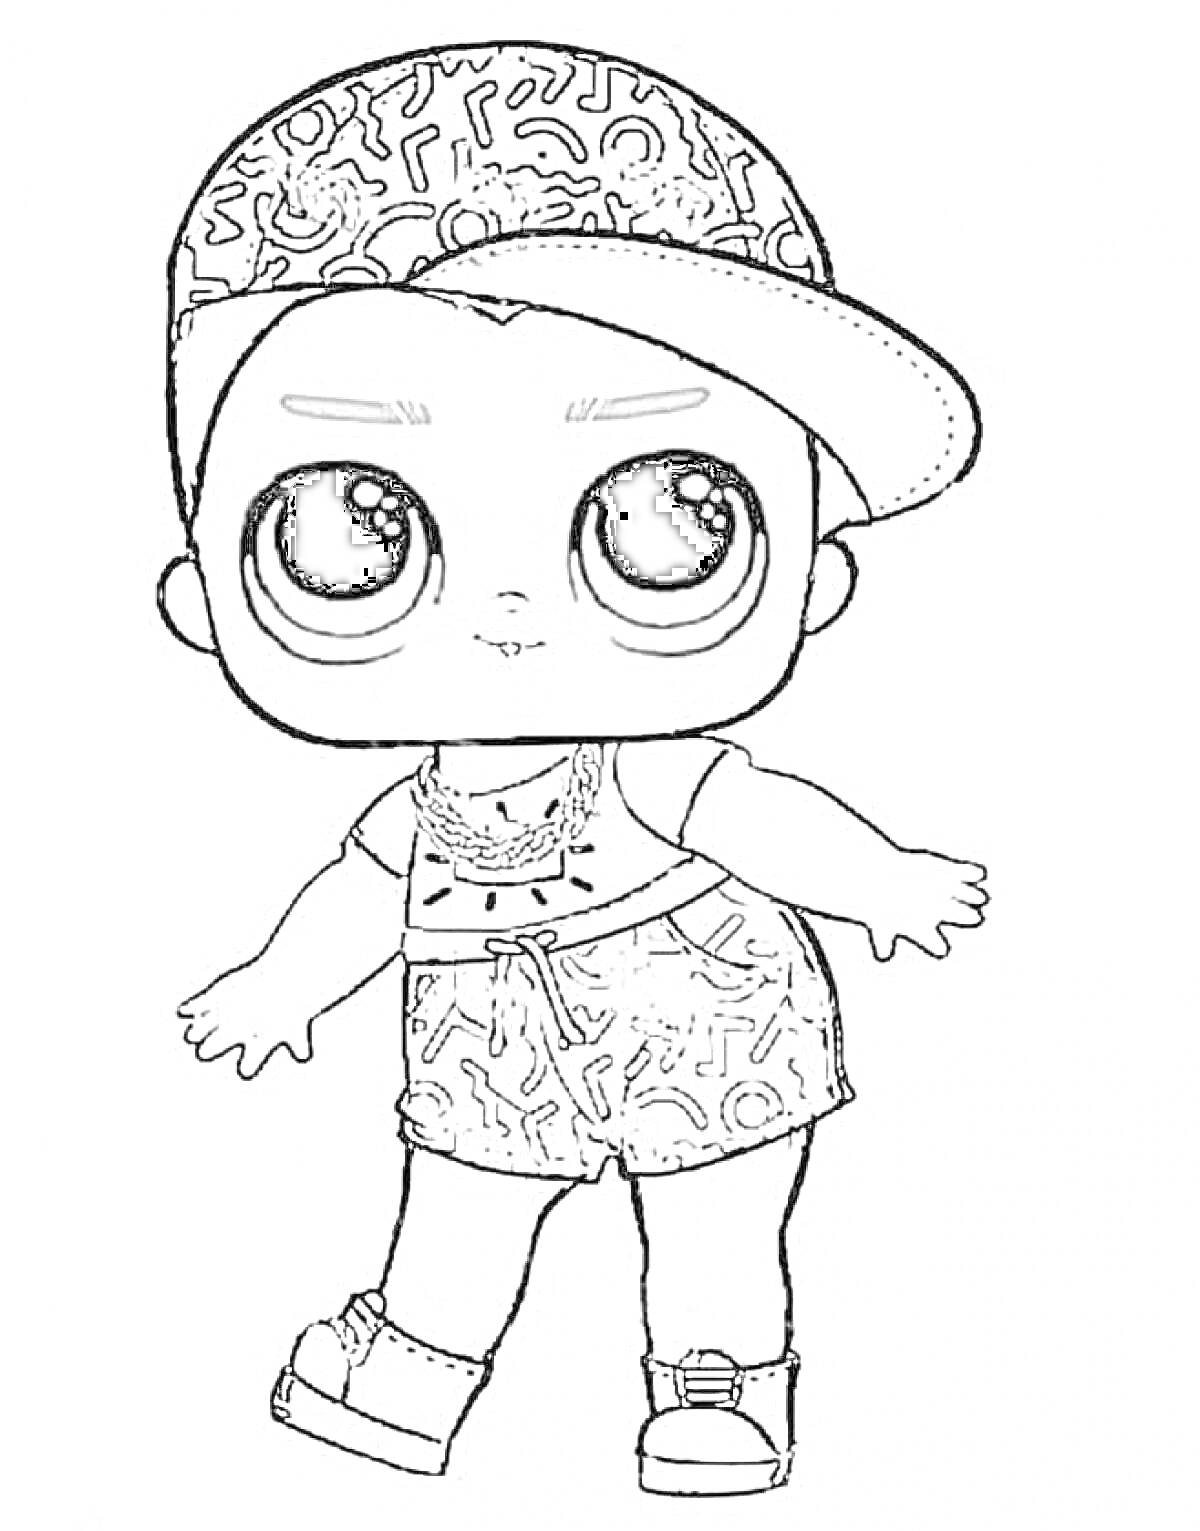 Раскраска Девочка ЛОЛ в кепке с узорами, футболке и шортах с узорами